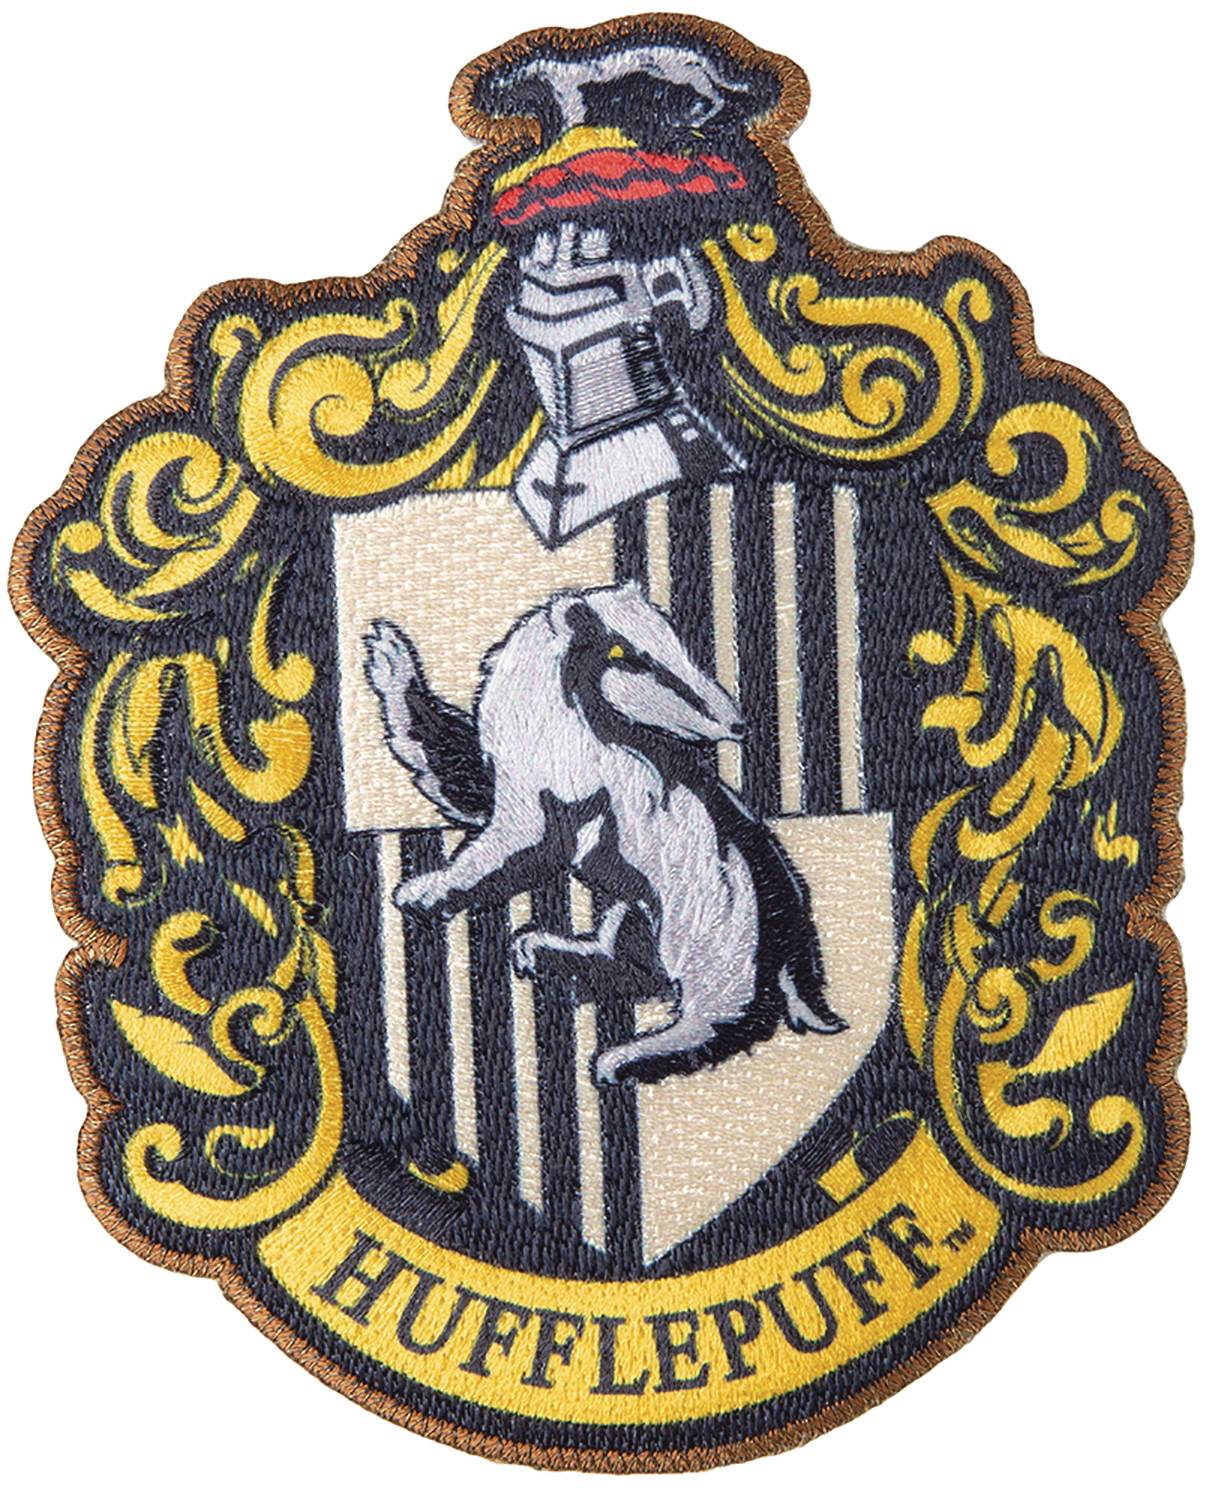 Harry Potter Hufflepuff Patch